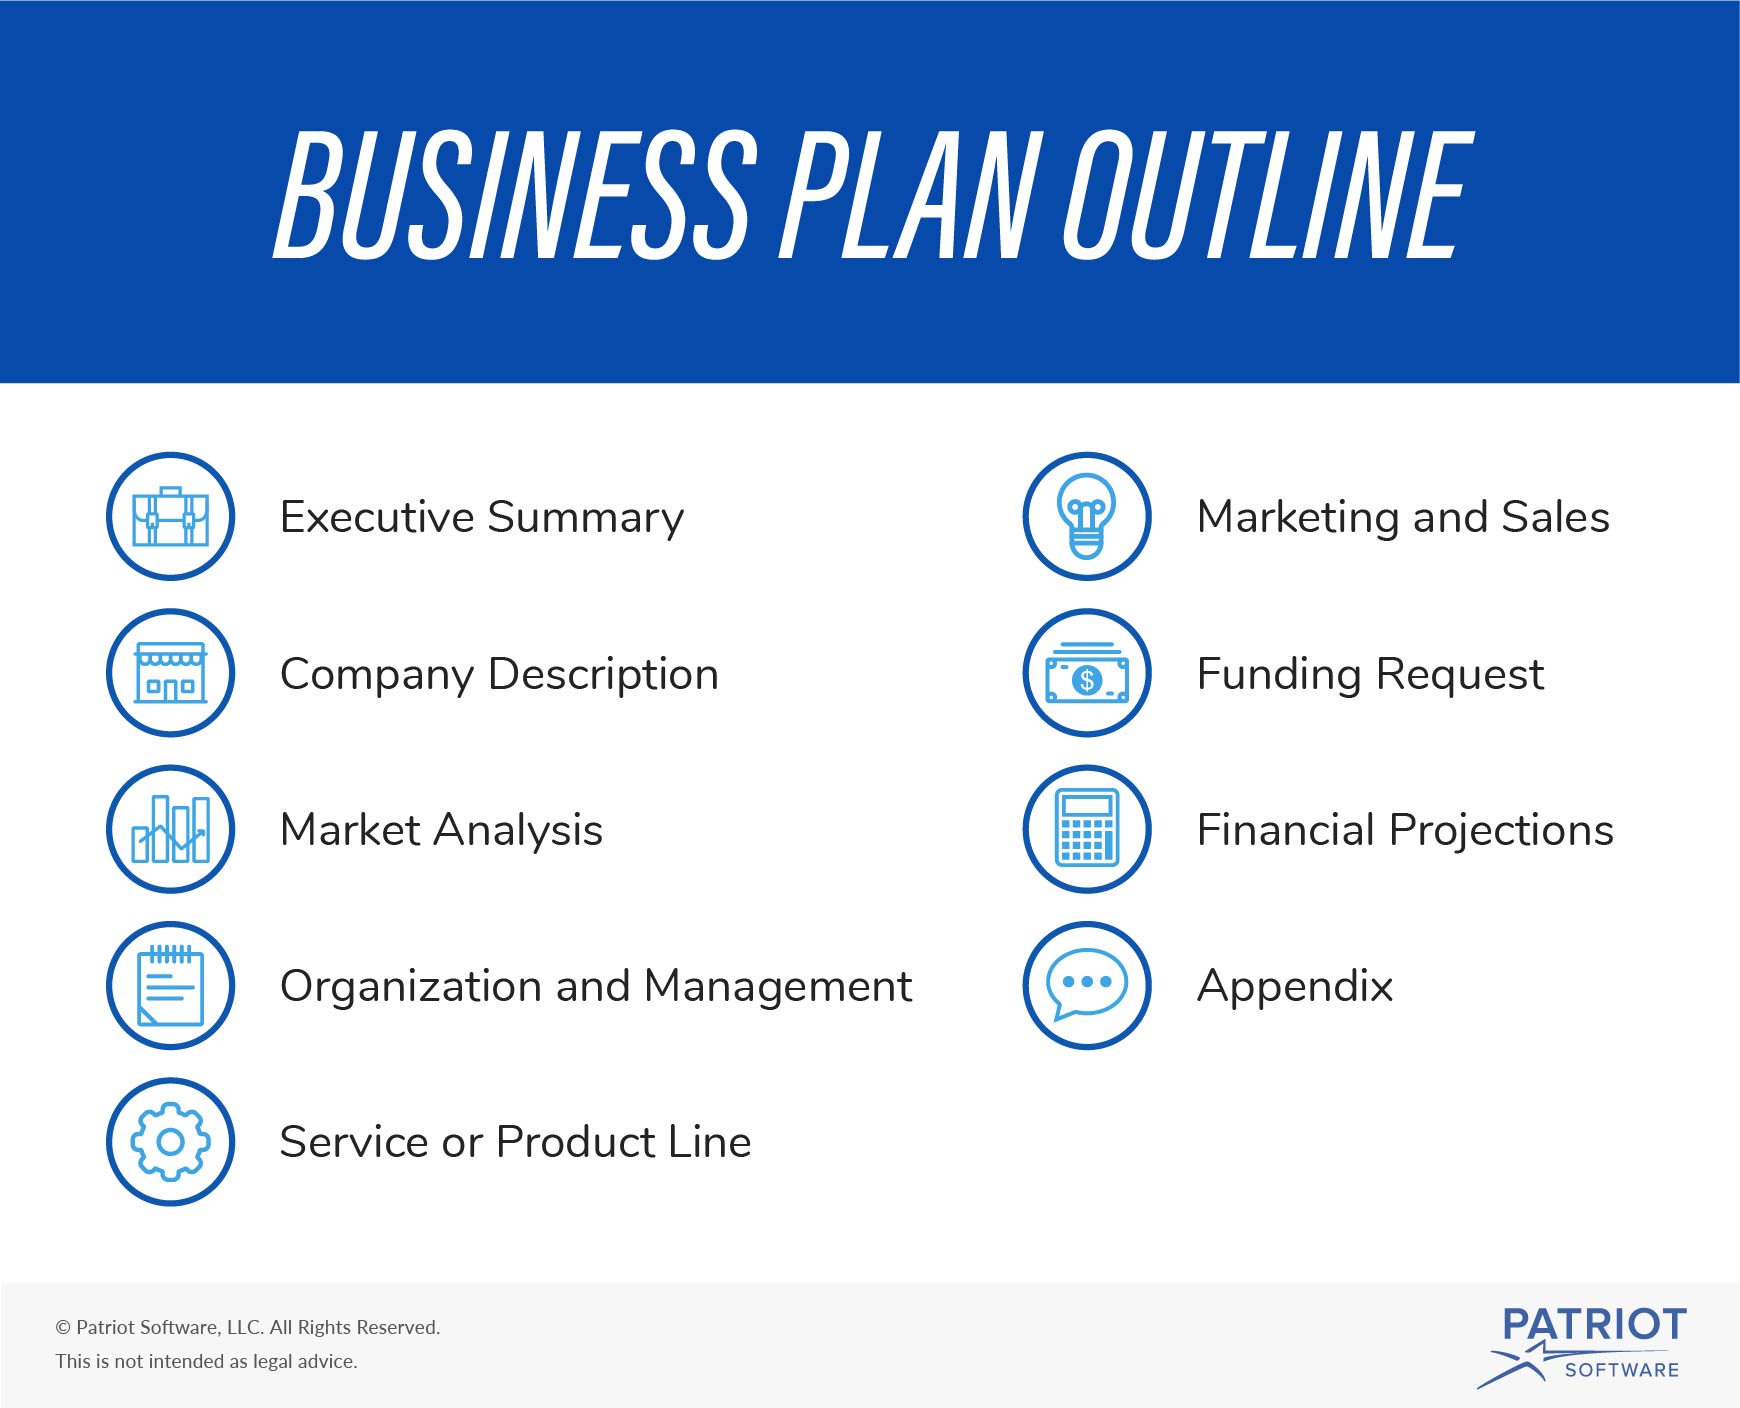 Help write a business plan